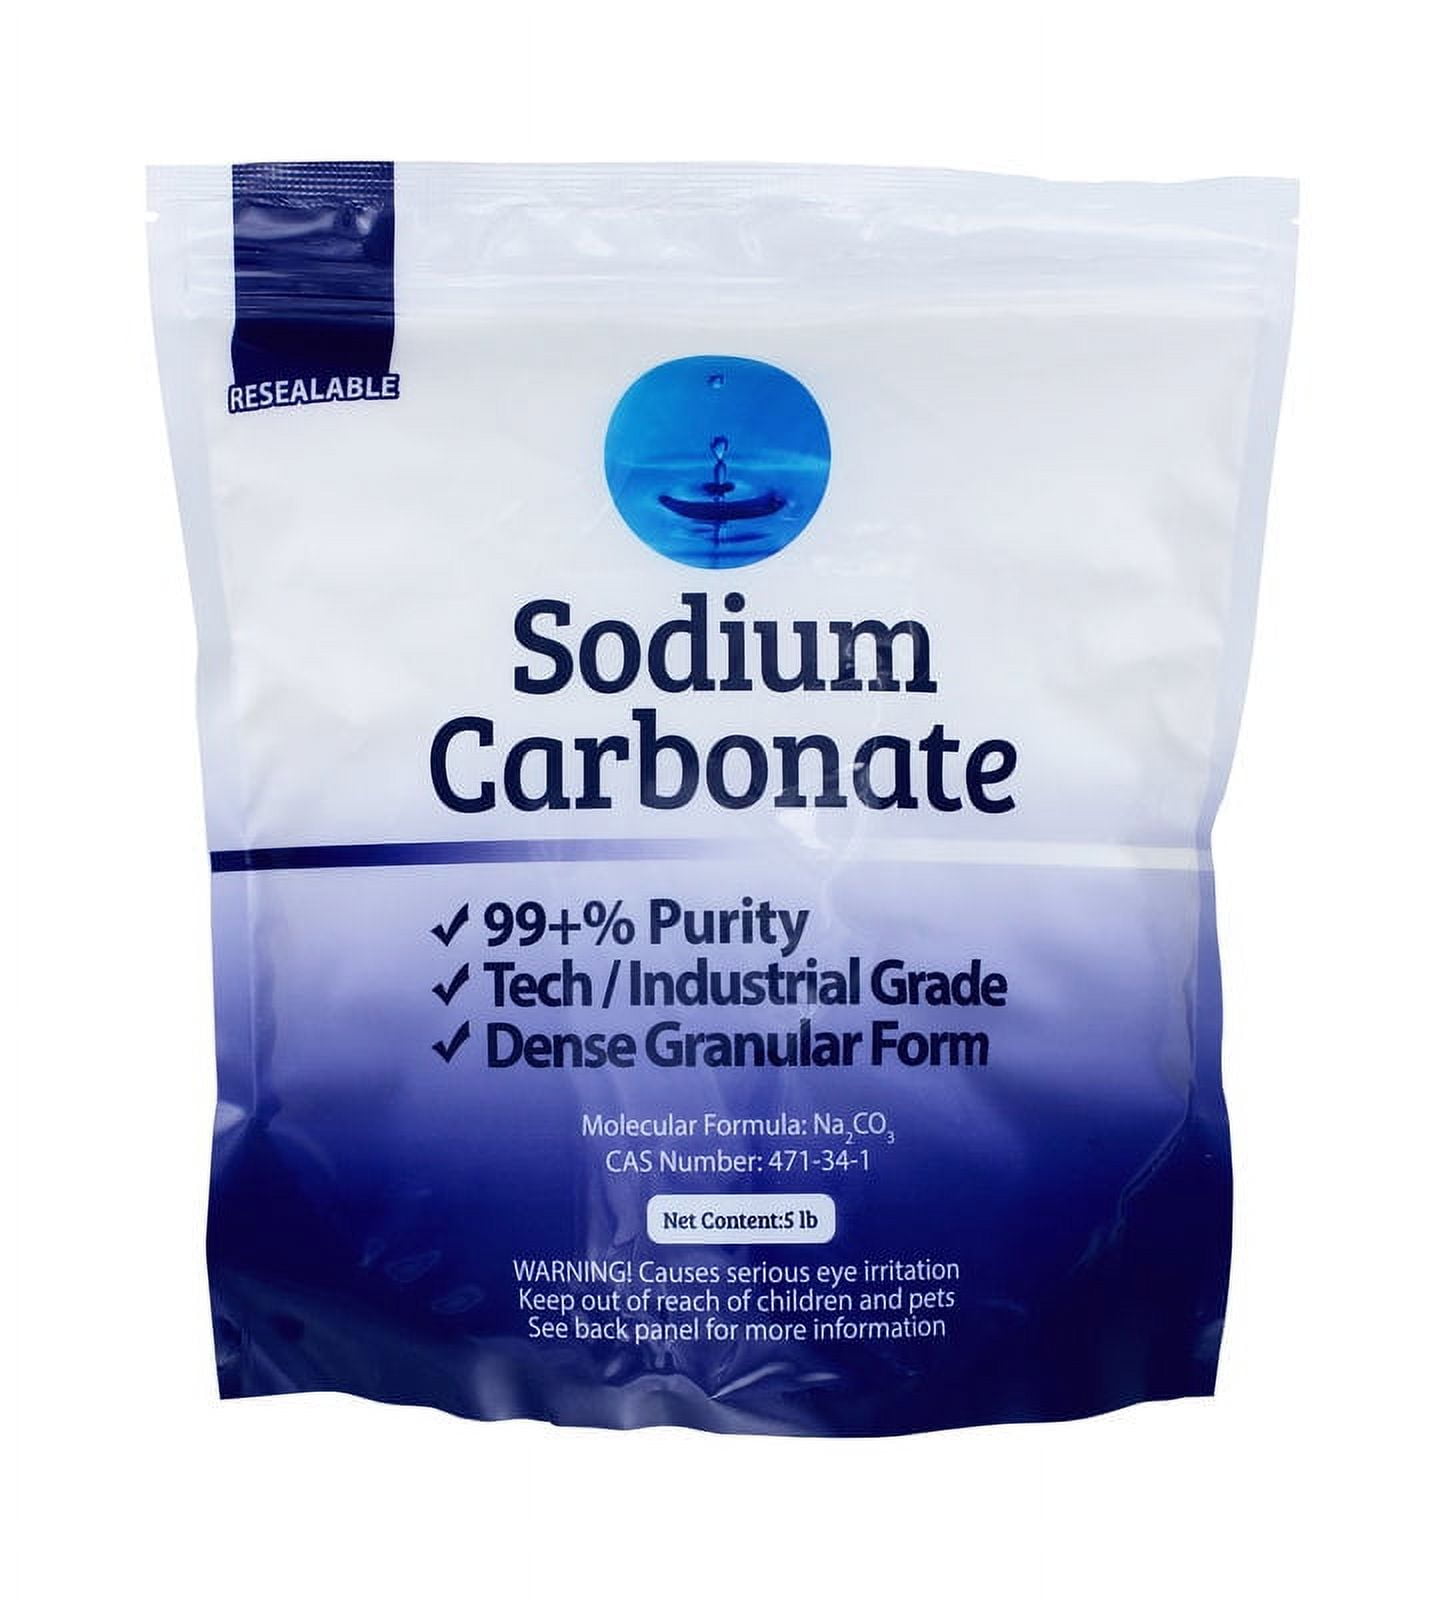 Soda Ash - Sodium Carbonate - Washing Soda - Soda Glass - Soda Ash Fixer -  Mordant - Natural Dye - 2 oz